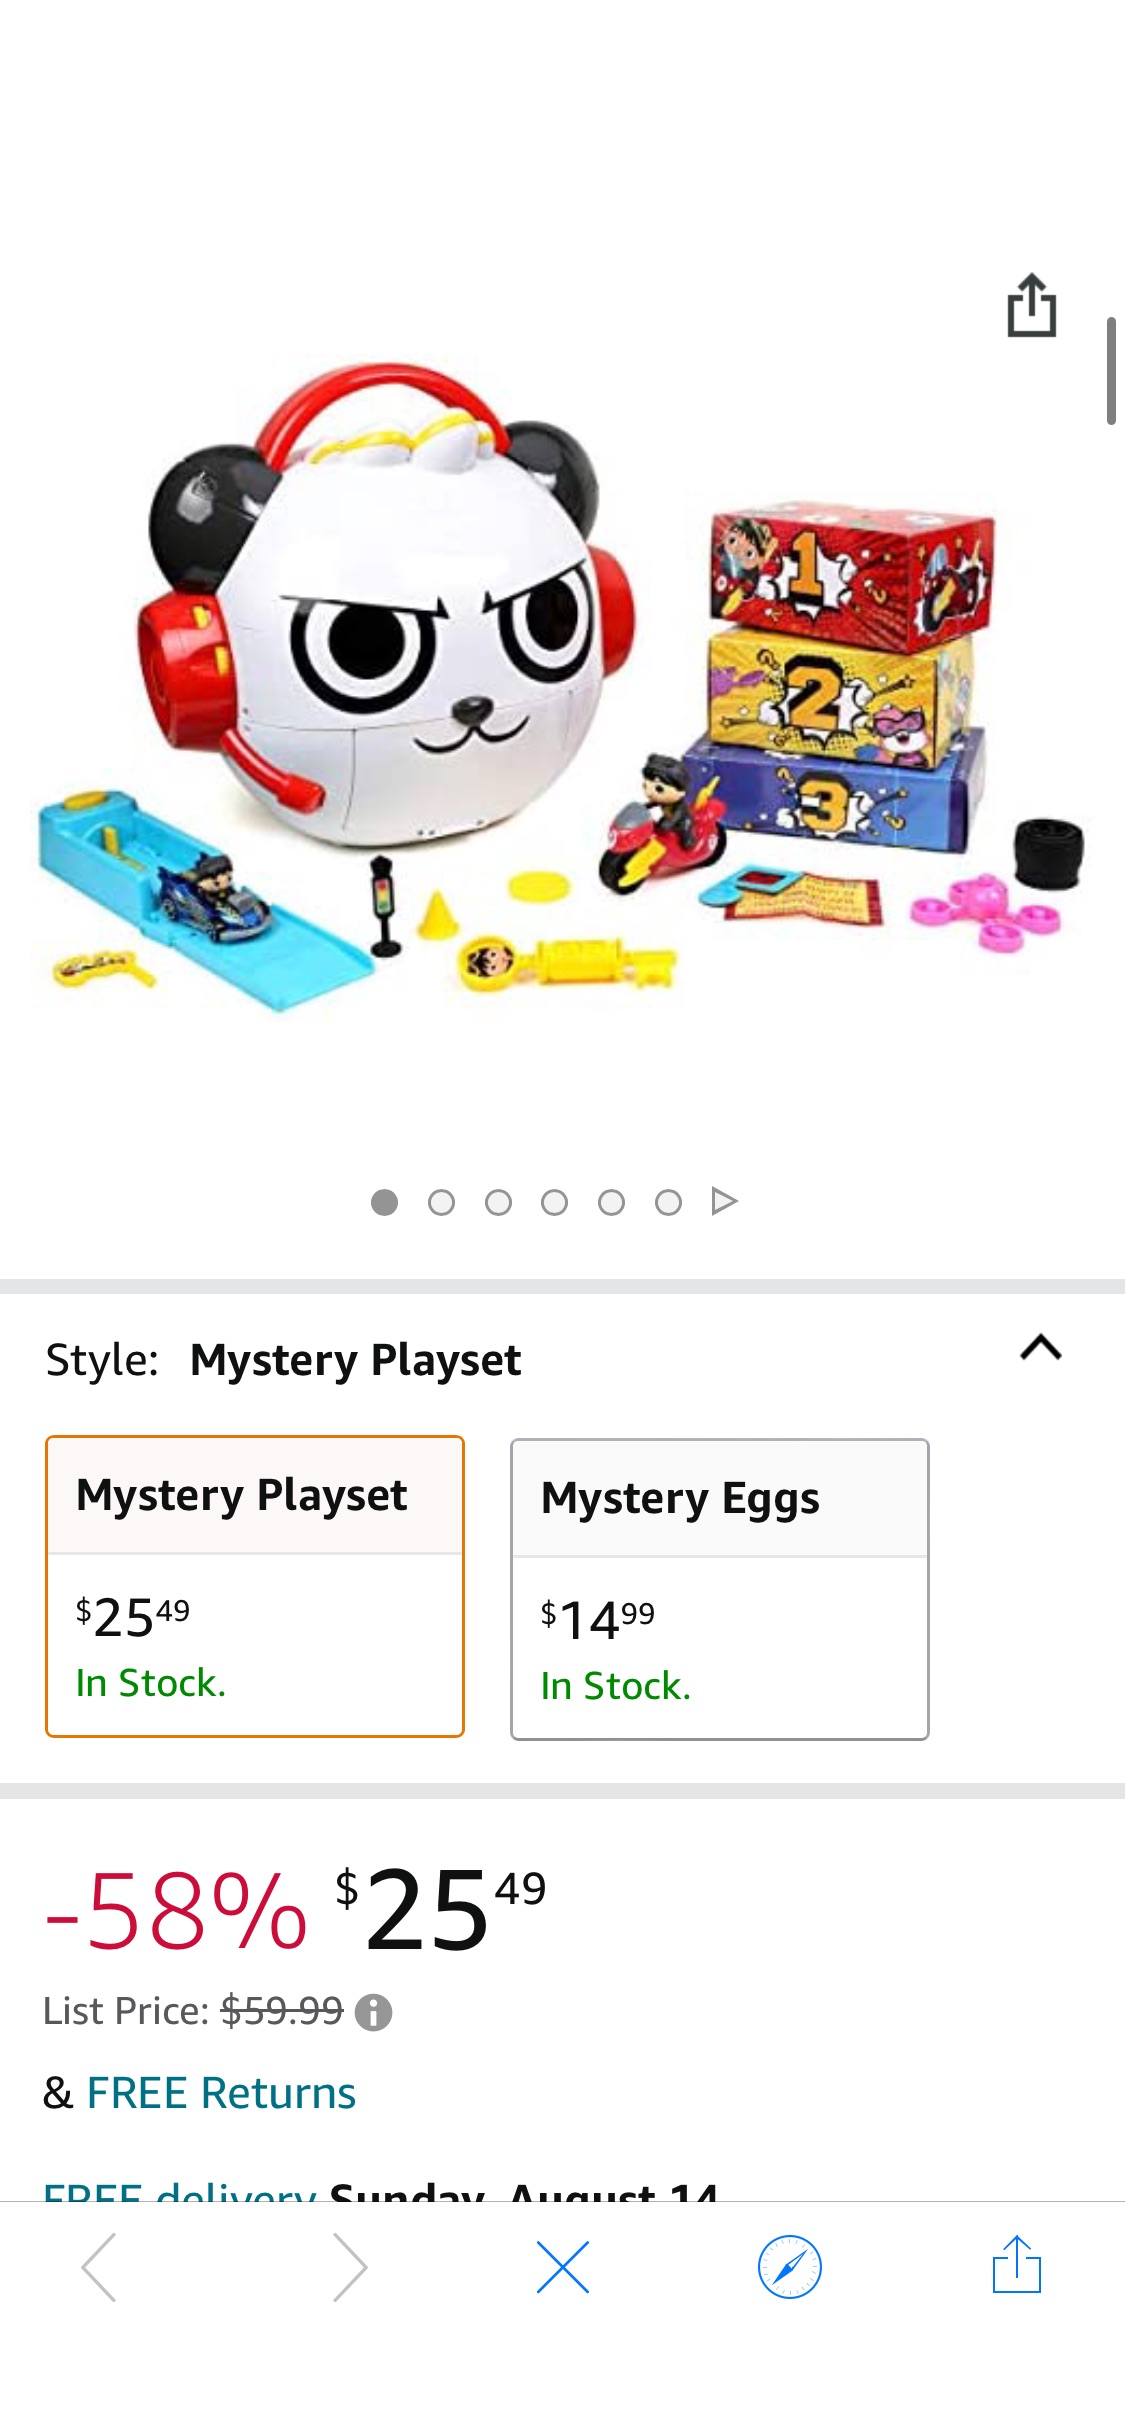 Amazon.com: Jada Toys Ryan's World Combo Panda Mystery Vehicle Playset, Toys for Kids (31747) : Toys & Games